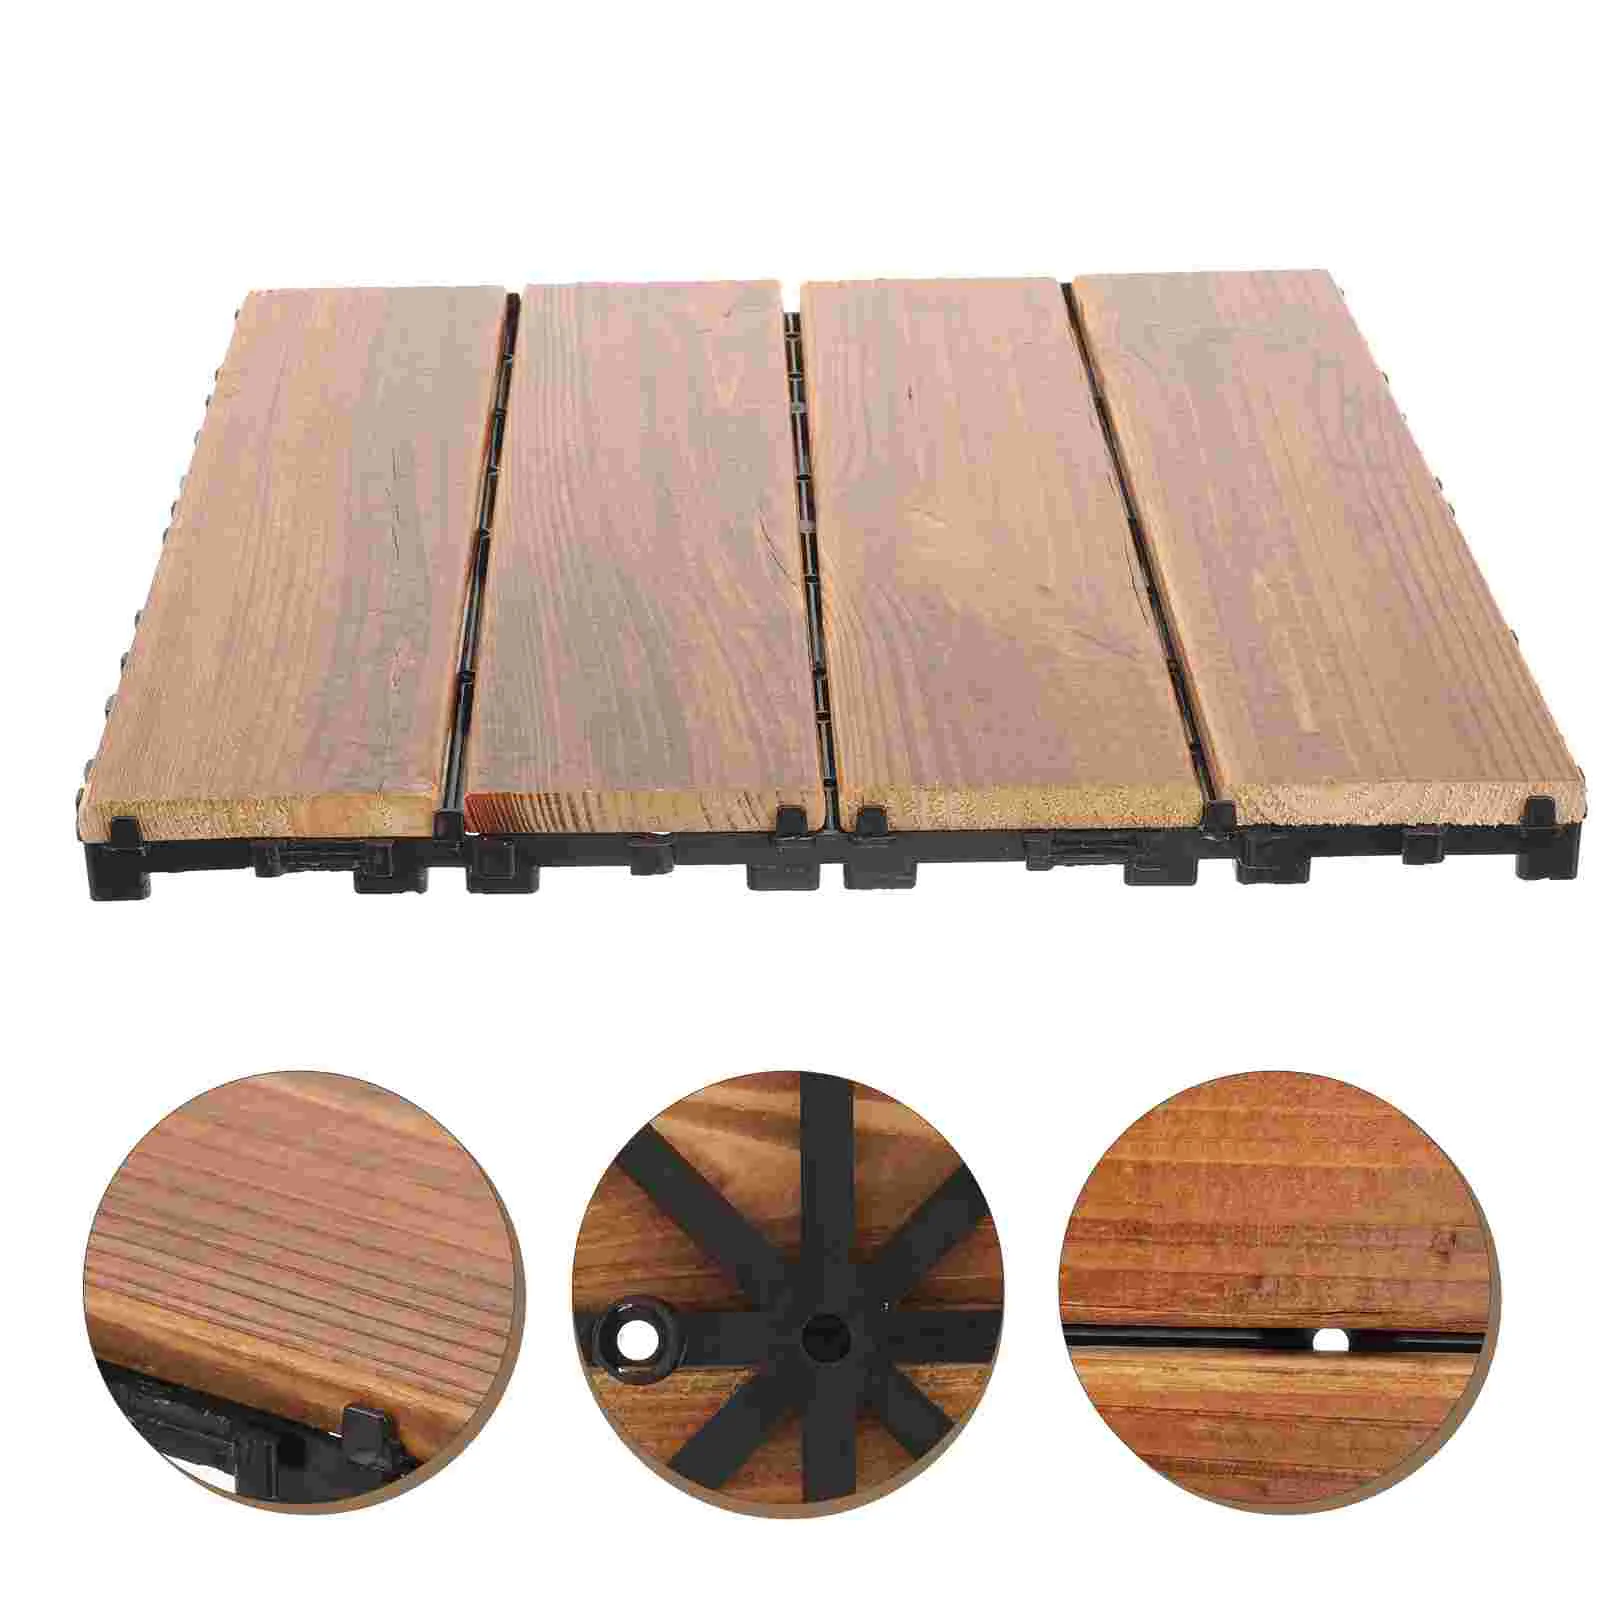 

Tile Interlocking Patio Deck Tiles Flooring Water Proof Outdoor Balcony Wooden Rugs Home Floating